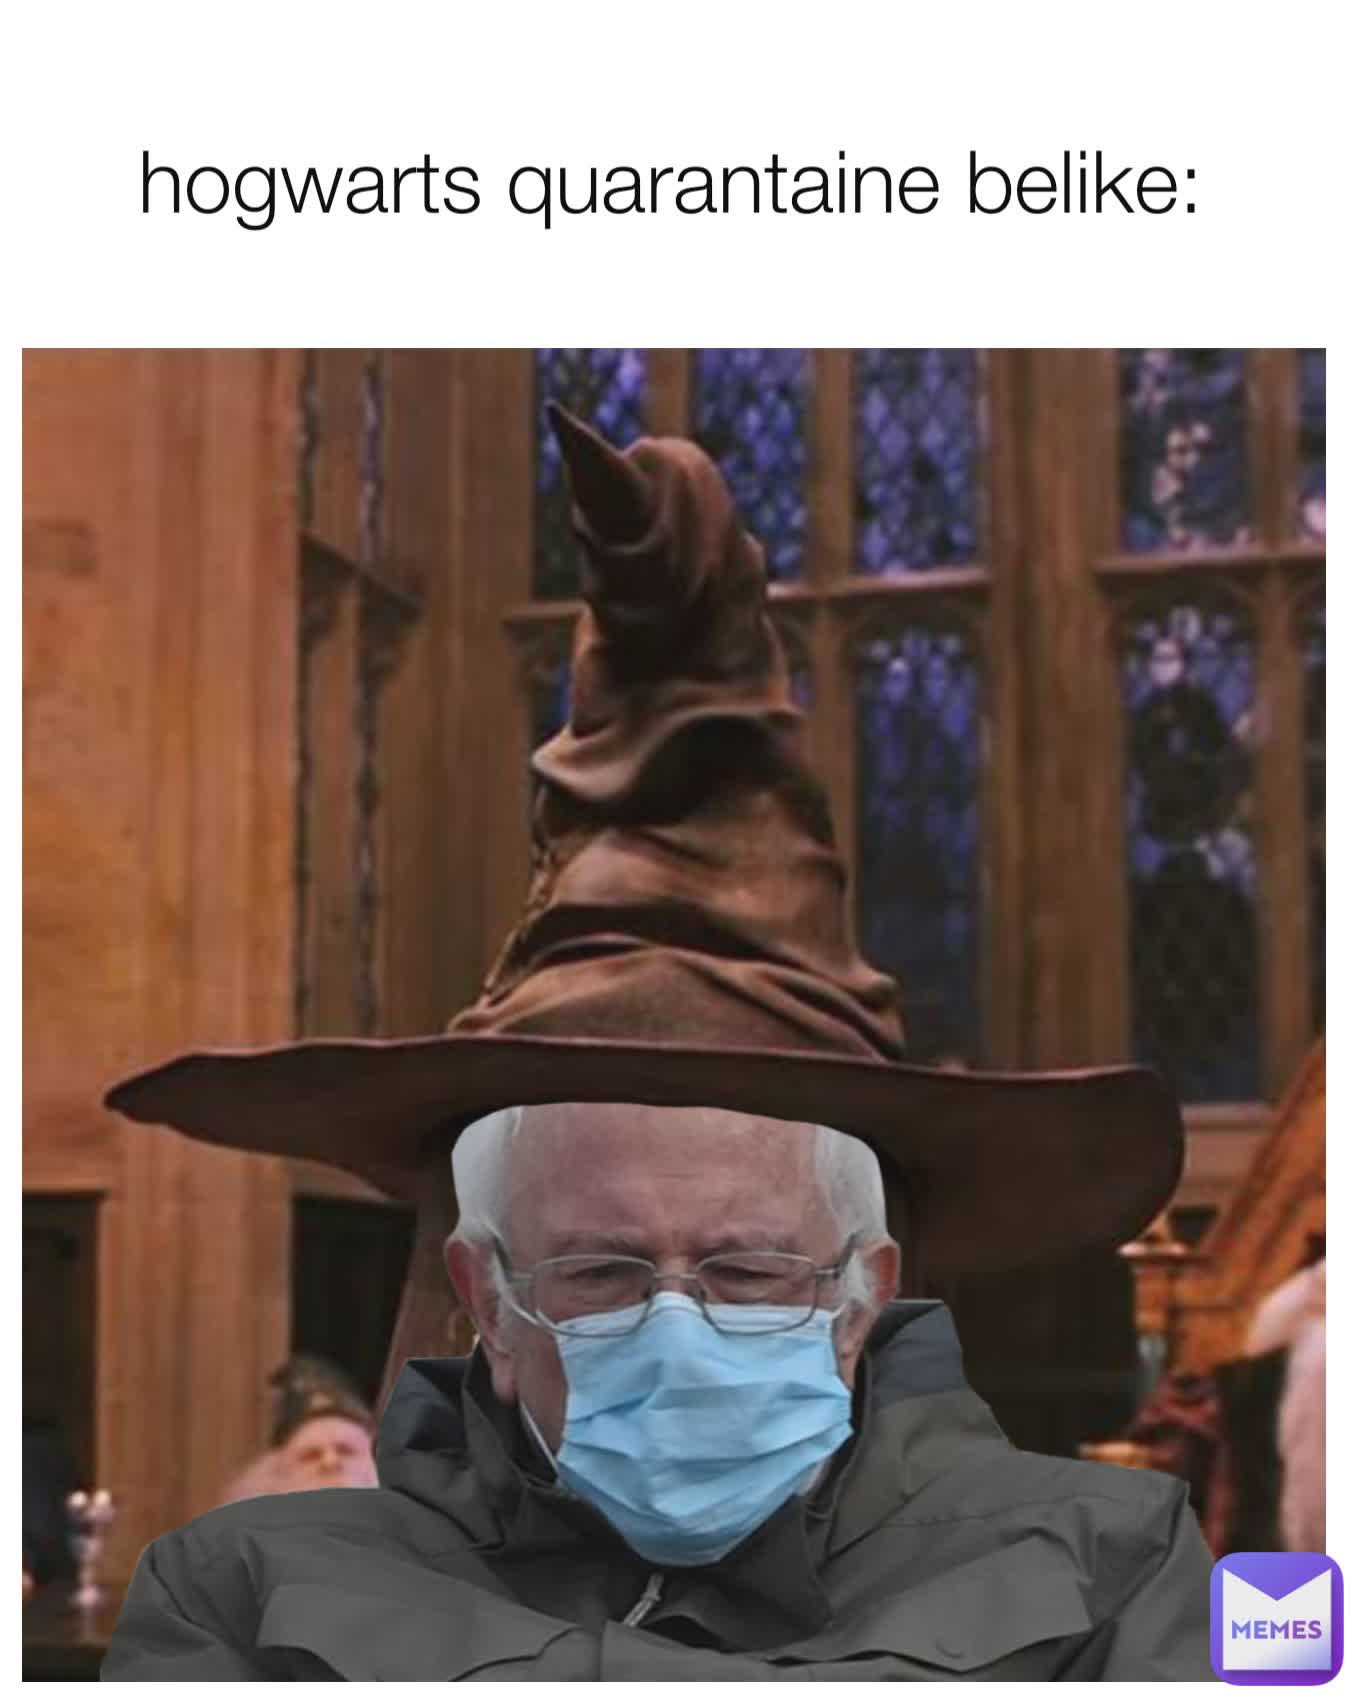 hogwarts quarantaine belike: